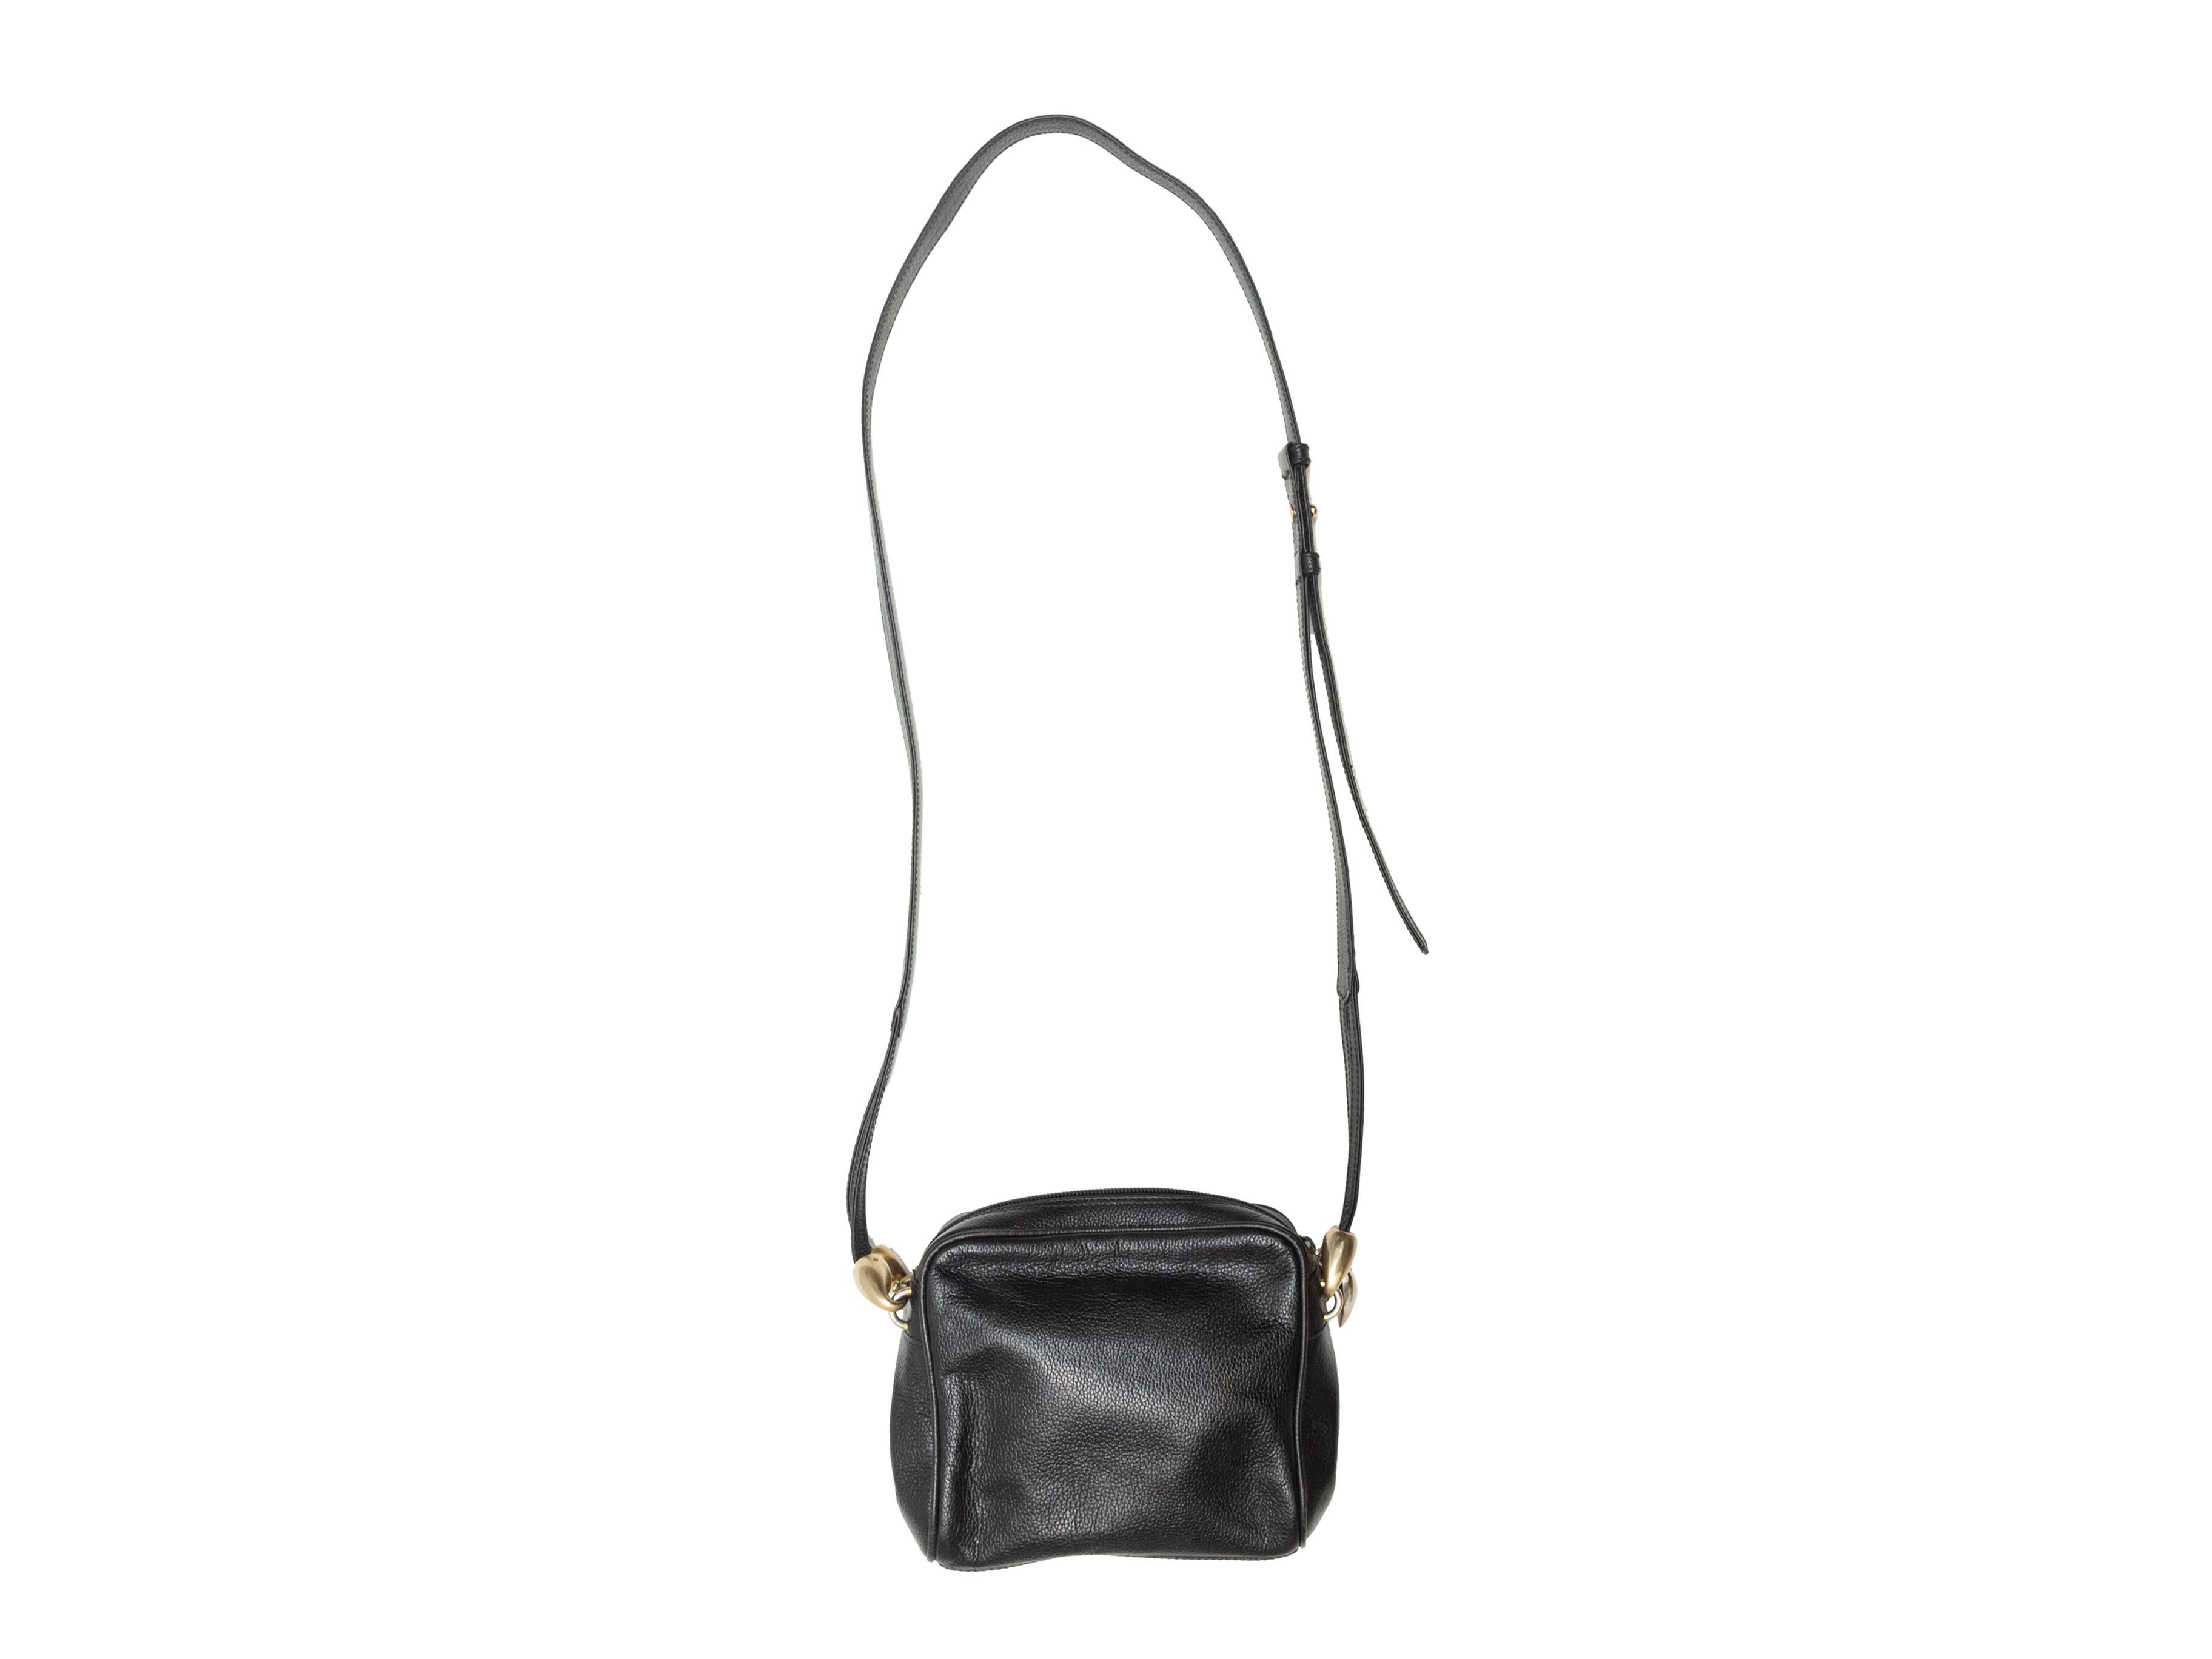 Product details: Black leather crossbody bag by De Vecchi by Hamilton Hodge. Gold-tone hardware. Interior zip pocket. Adjustable shoulder strap. Zip closure at top. 7